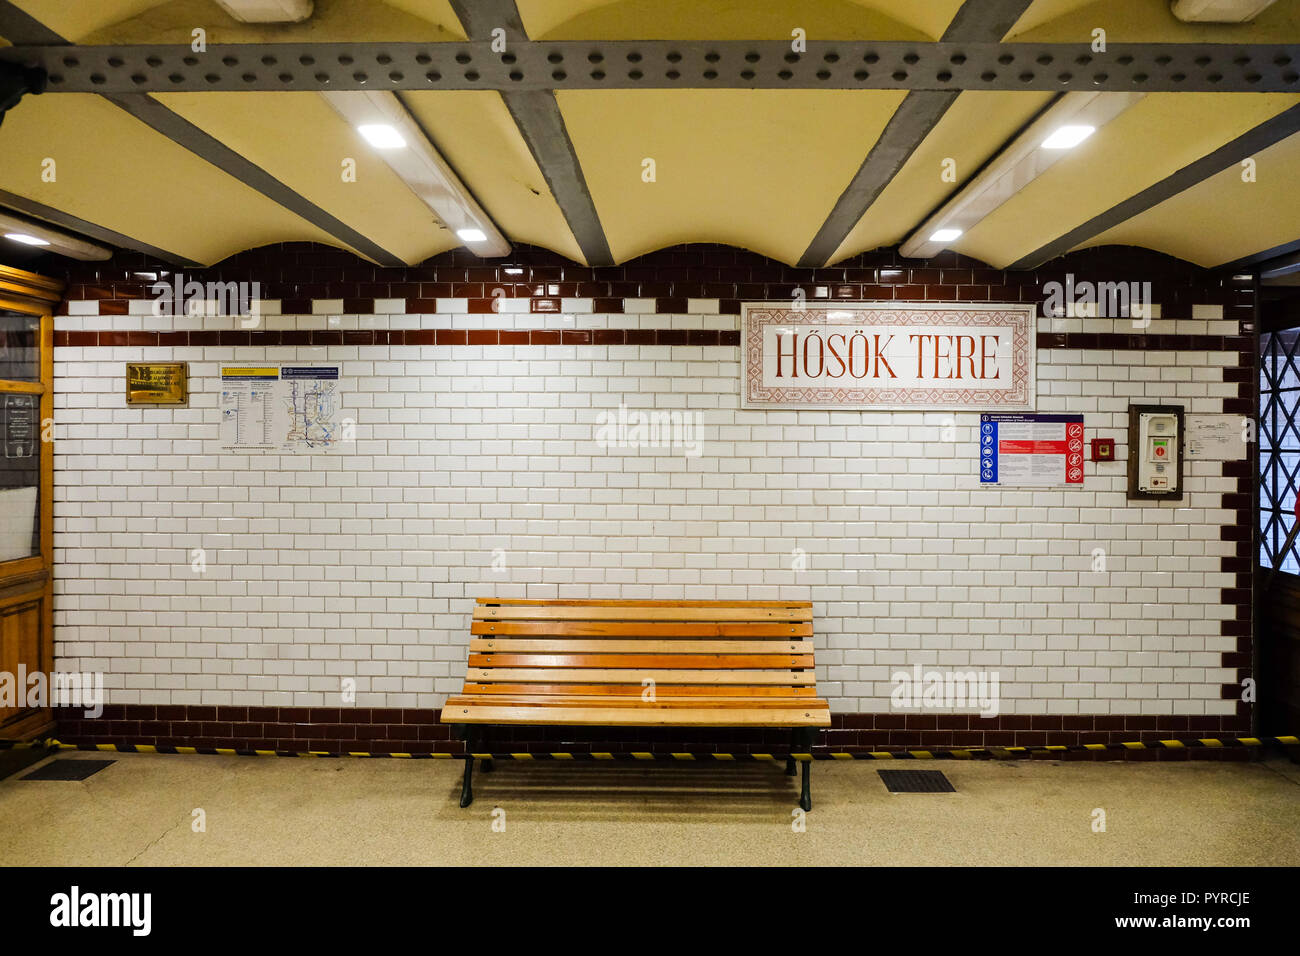 Metro station Hosok tere, Budapest, capital city of Hungary. October 2018 Stock Photo